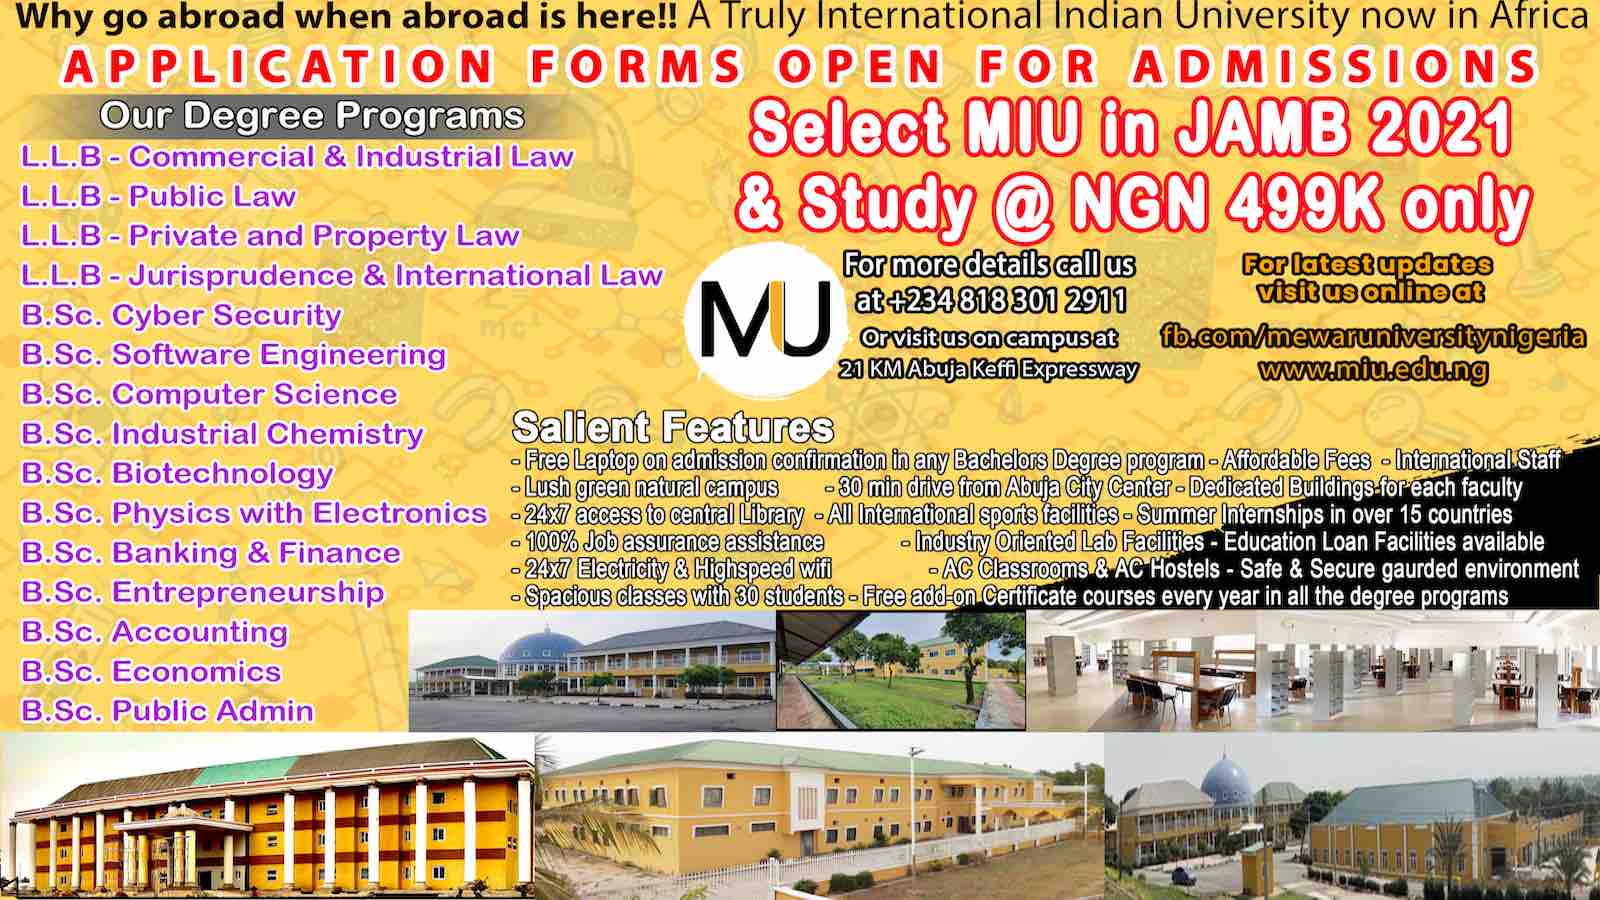 Mewar International University - Indian University in Africa